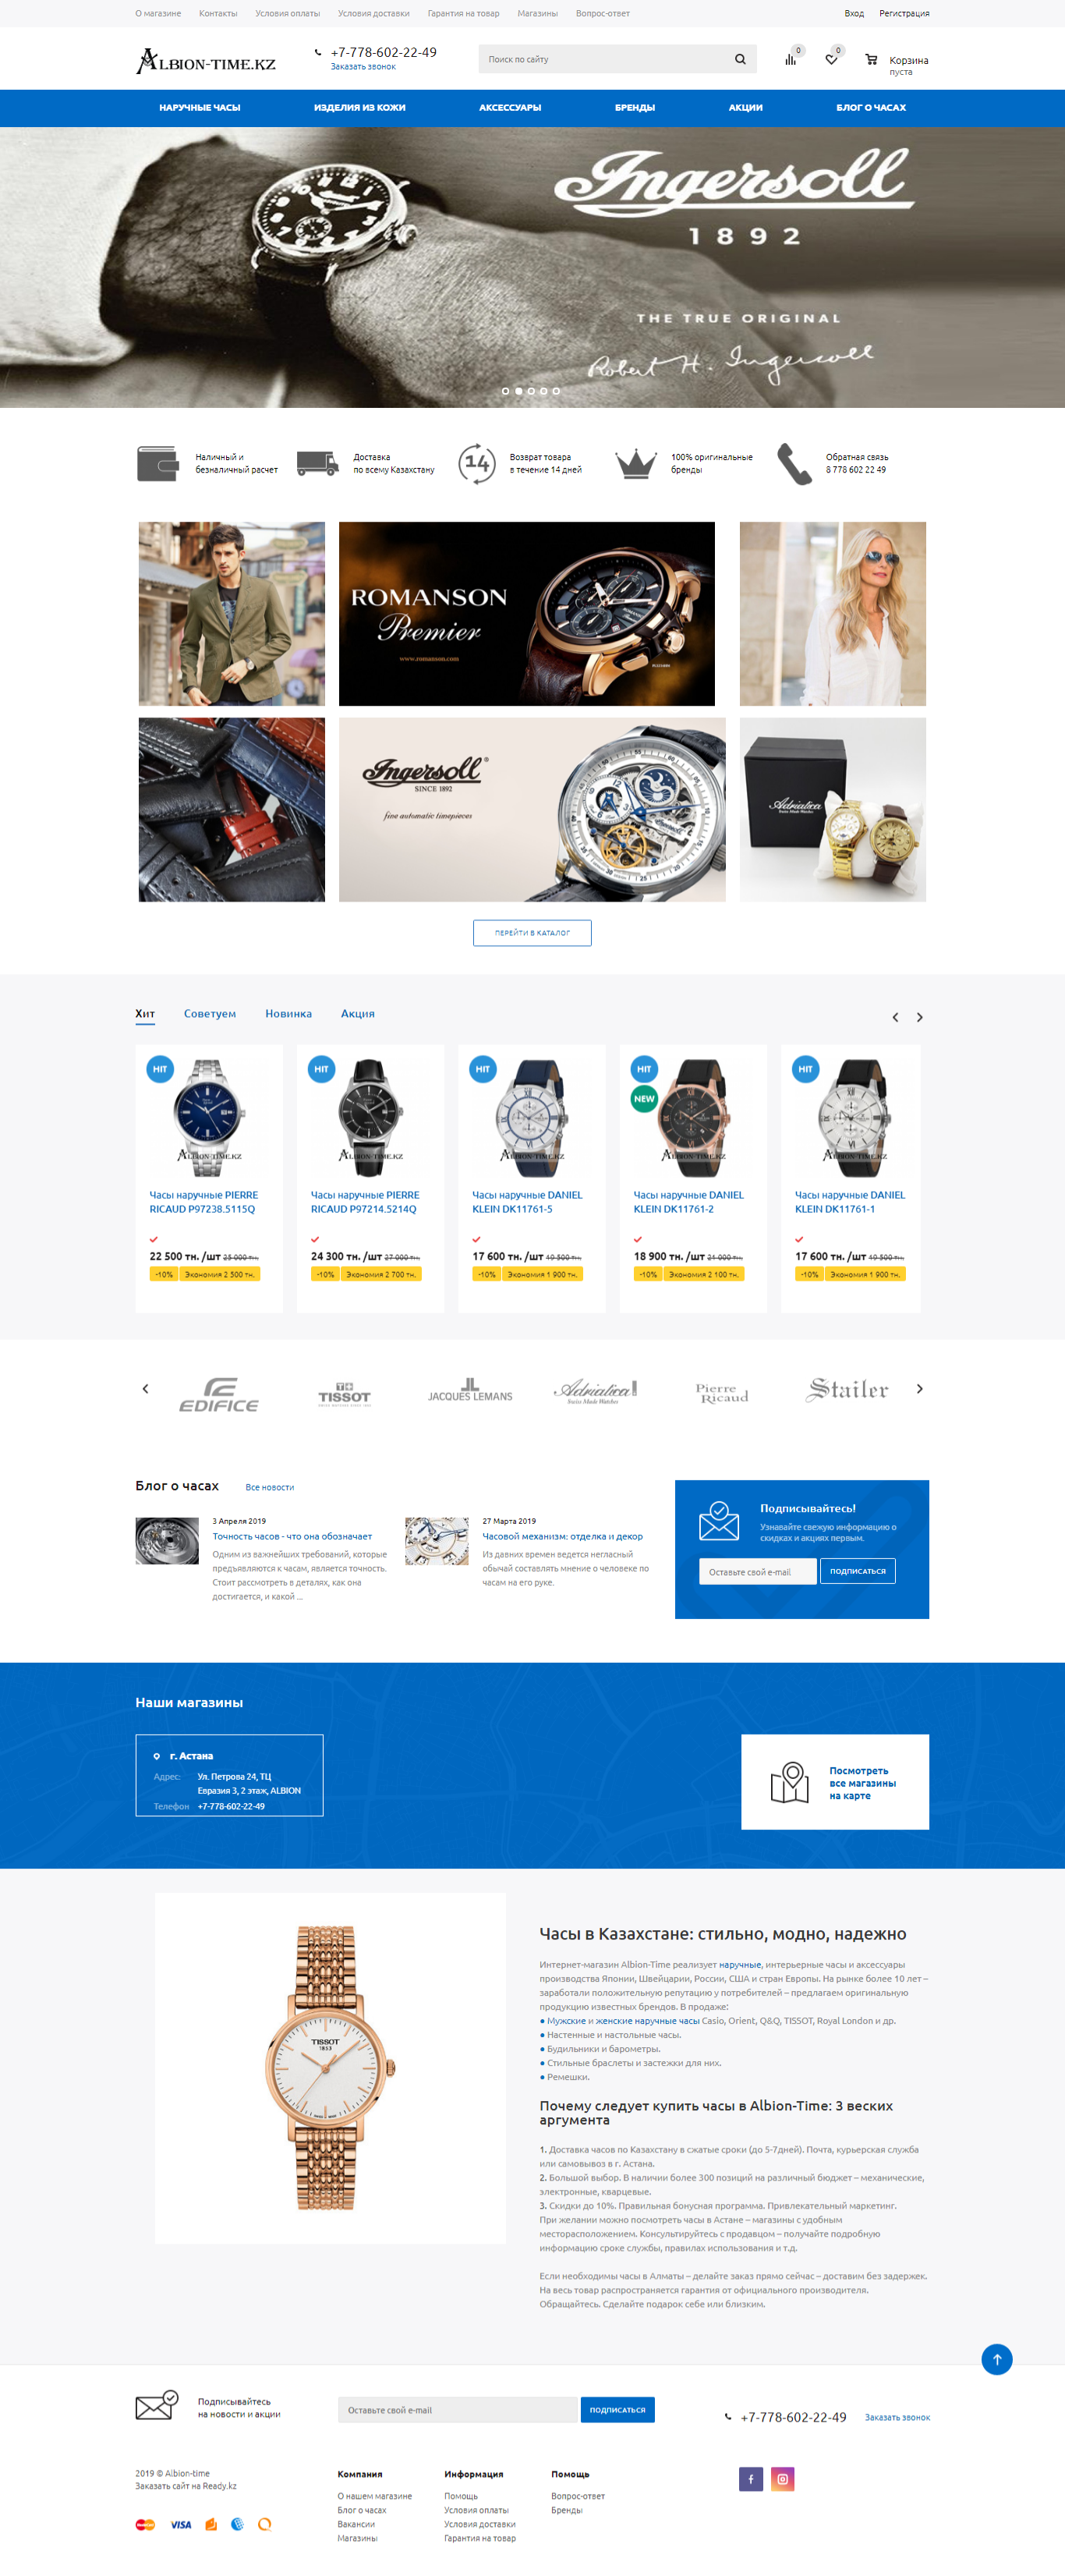 Albion-Time.kz: разработка интернет-магазина для продавца часов и аксессуаров